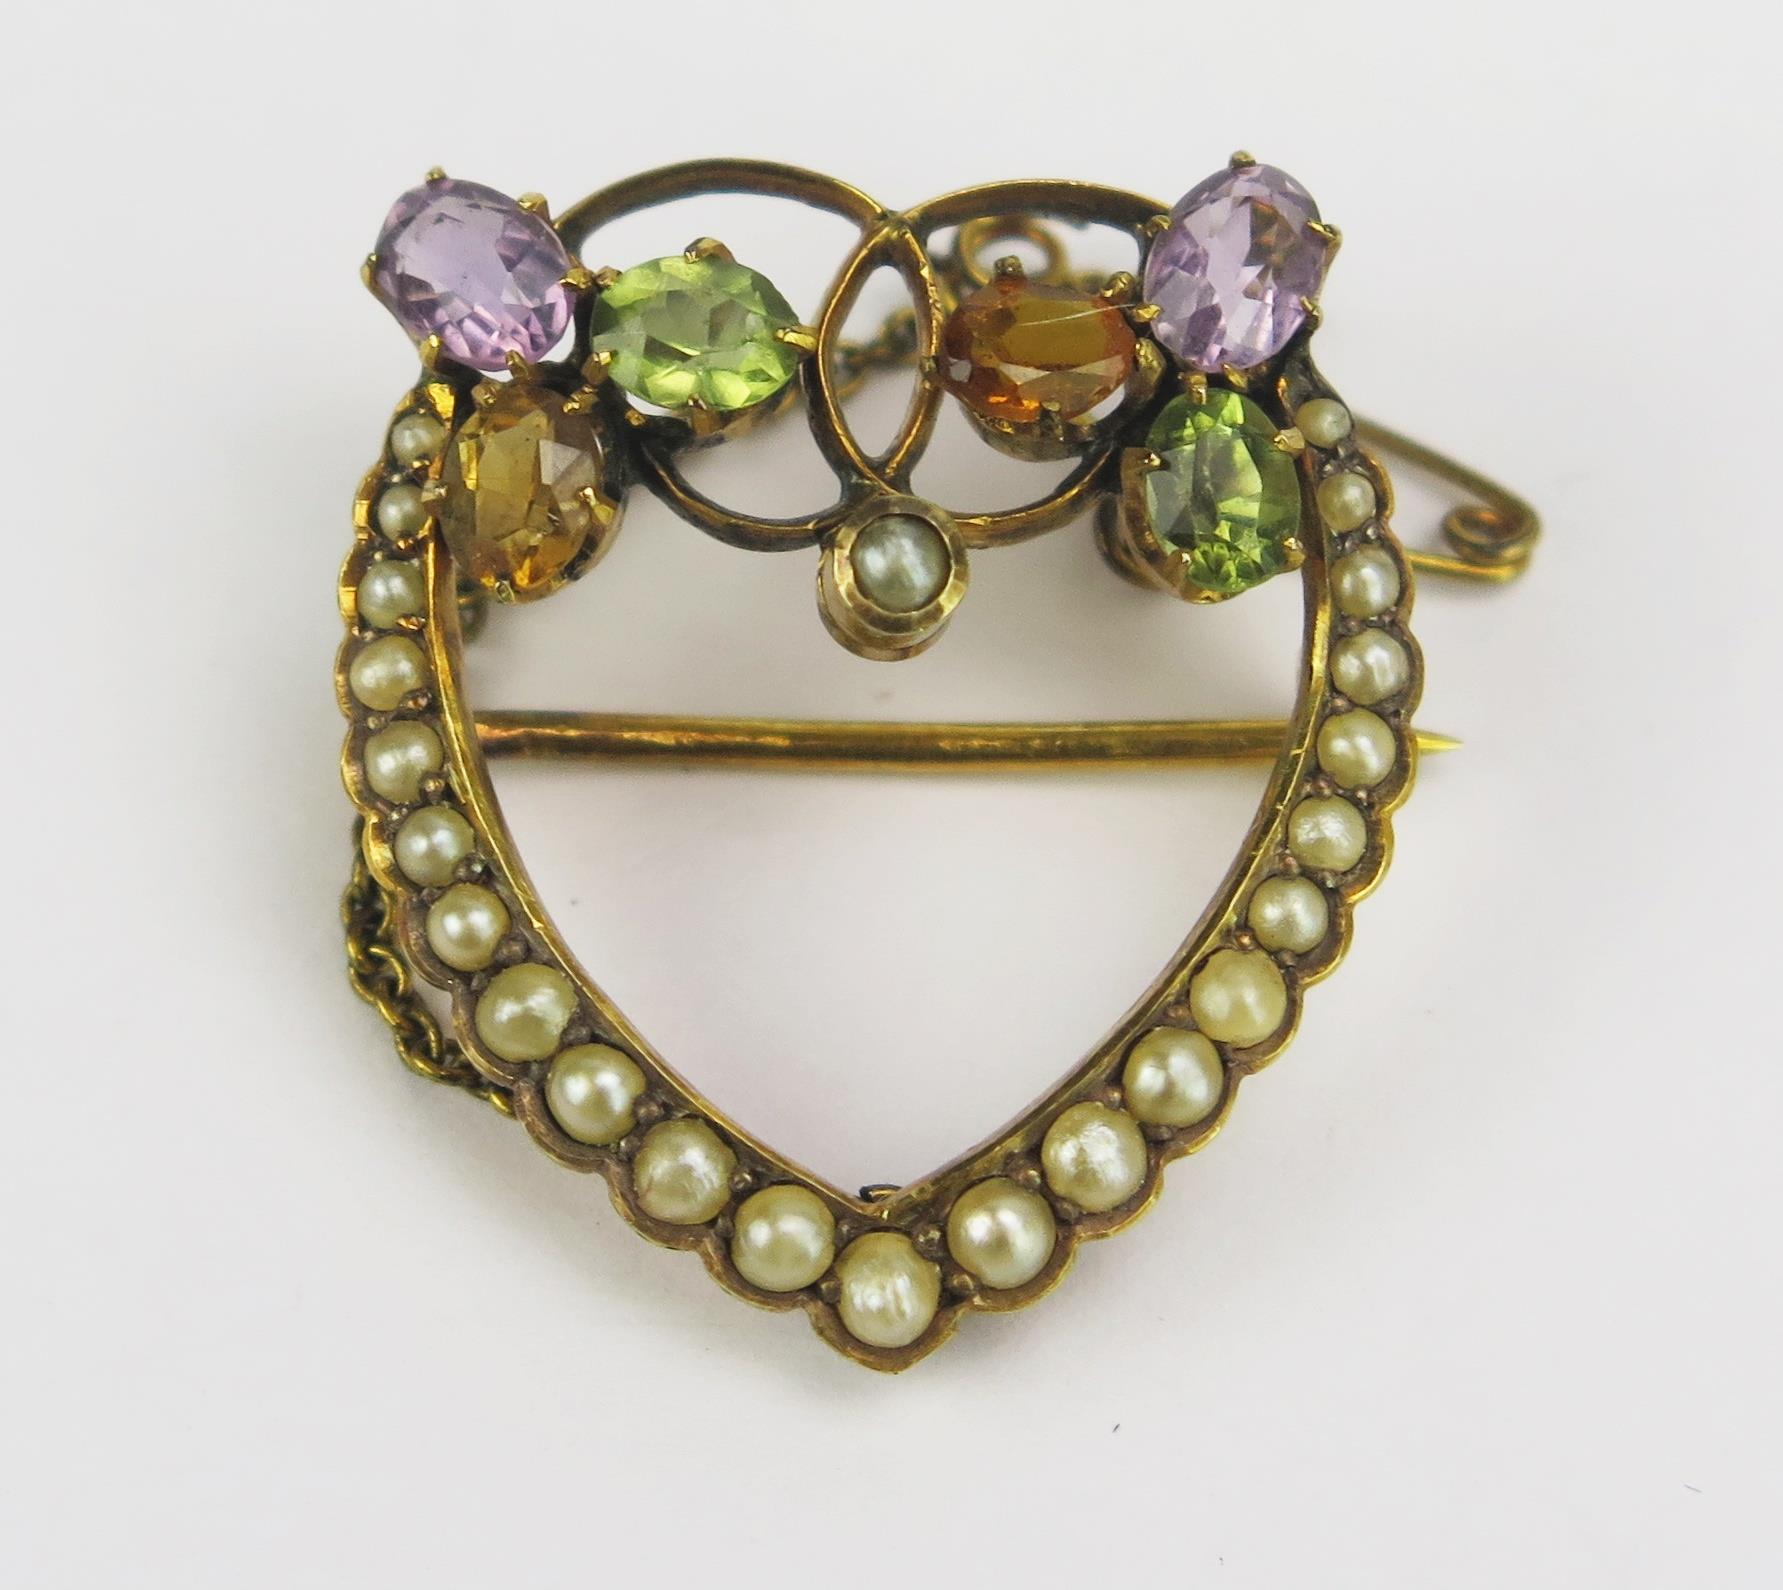 A Precious Yellow Metal, Pearl or Cultured Pearl and Semi Precious Stone Heart Shaped Brooch,